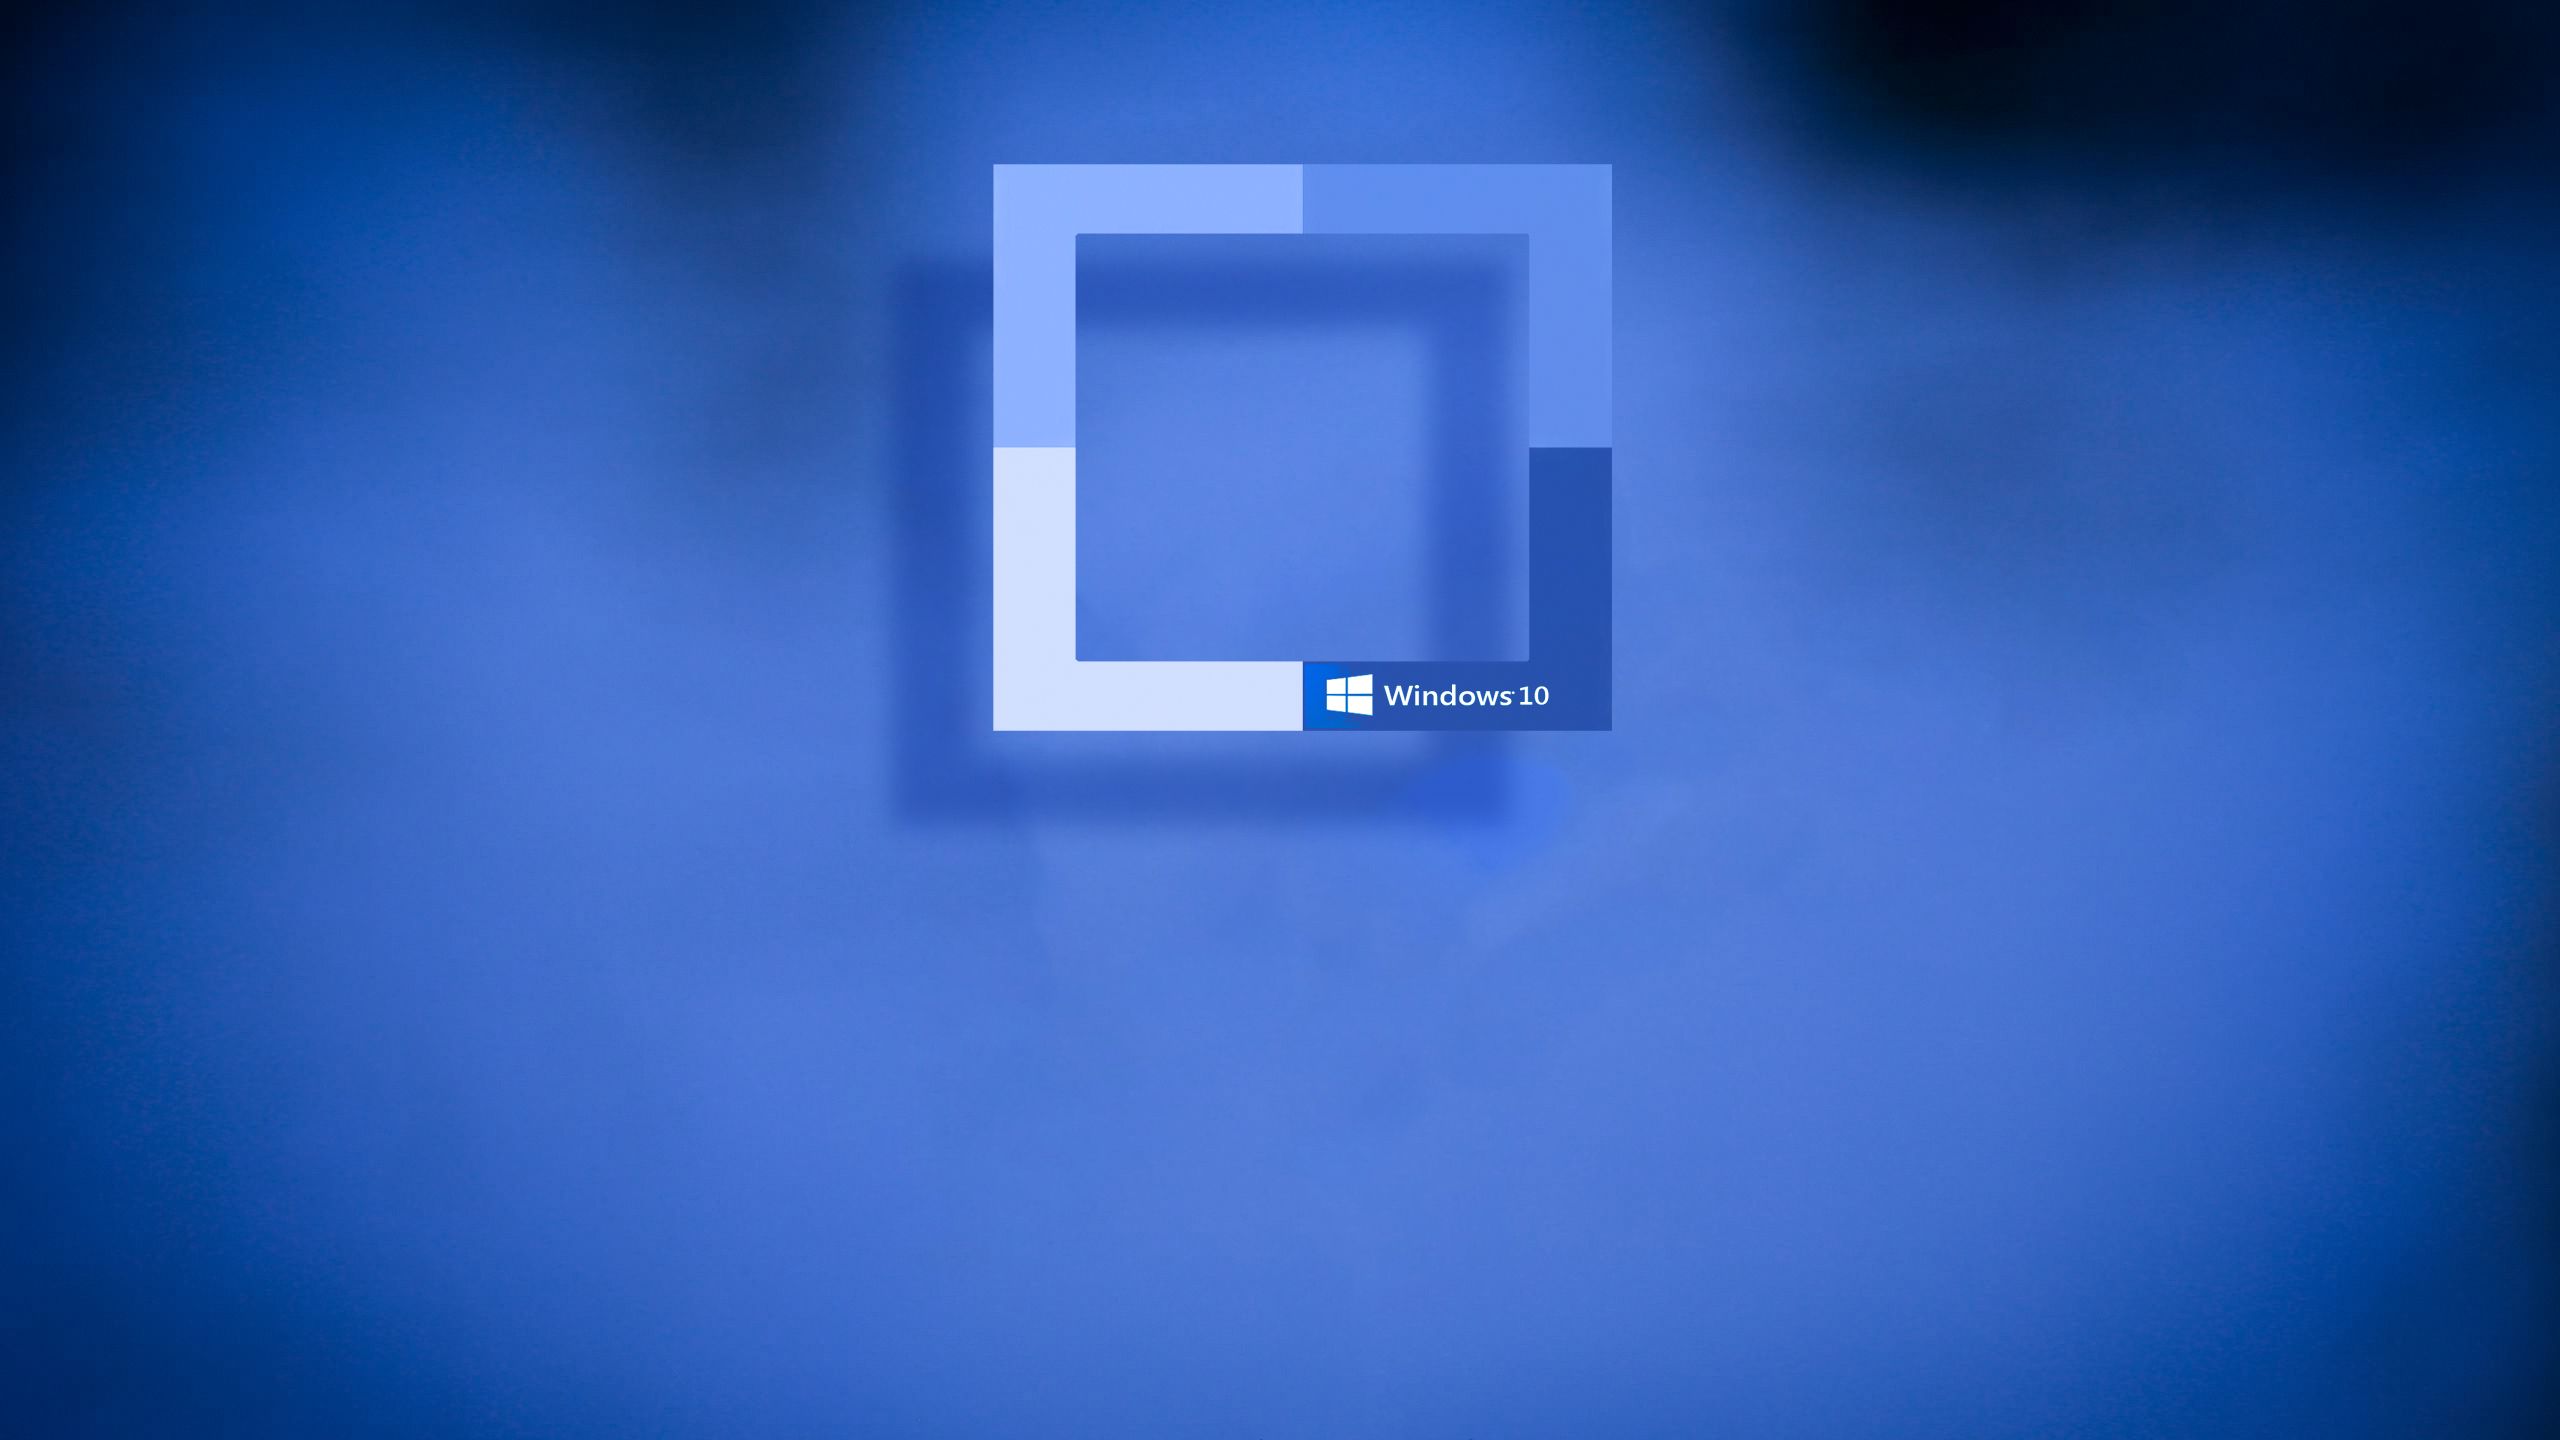 Windows 10 Desktop Is Black 25 High Resolution Wallpaper